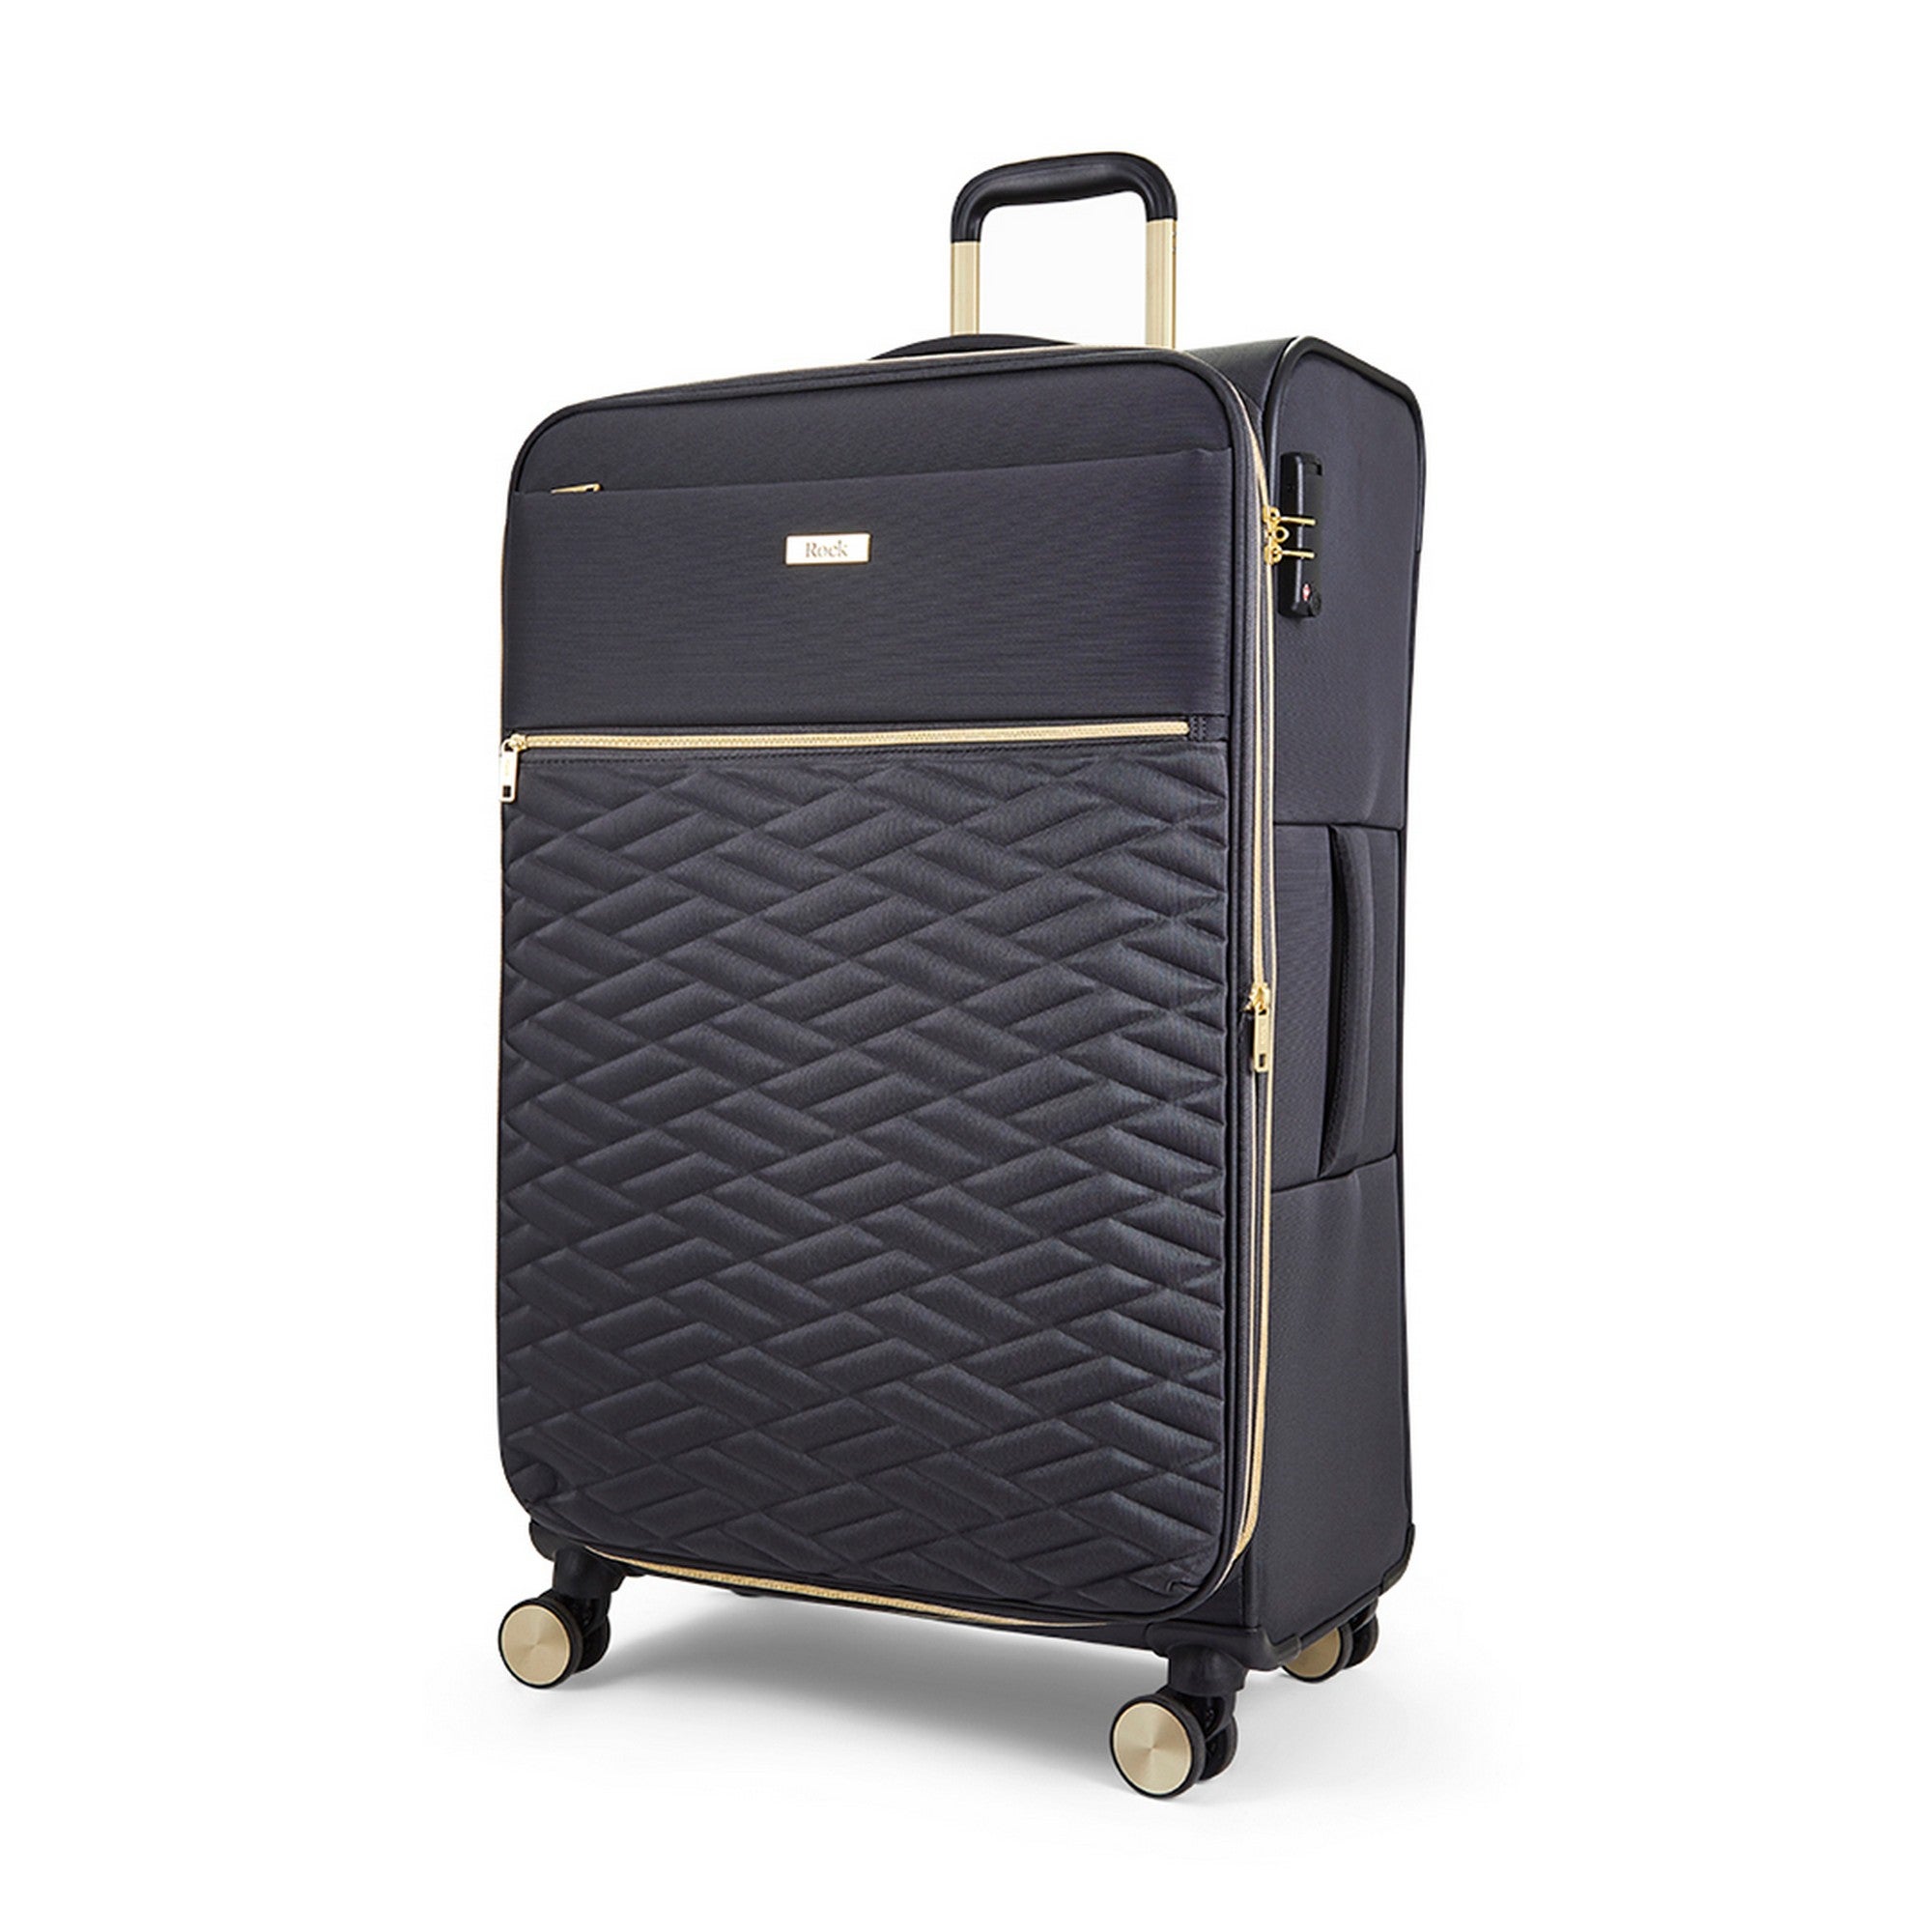 Rock Luggage Sloane Suitcase Charcoal